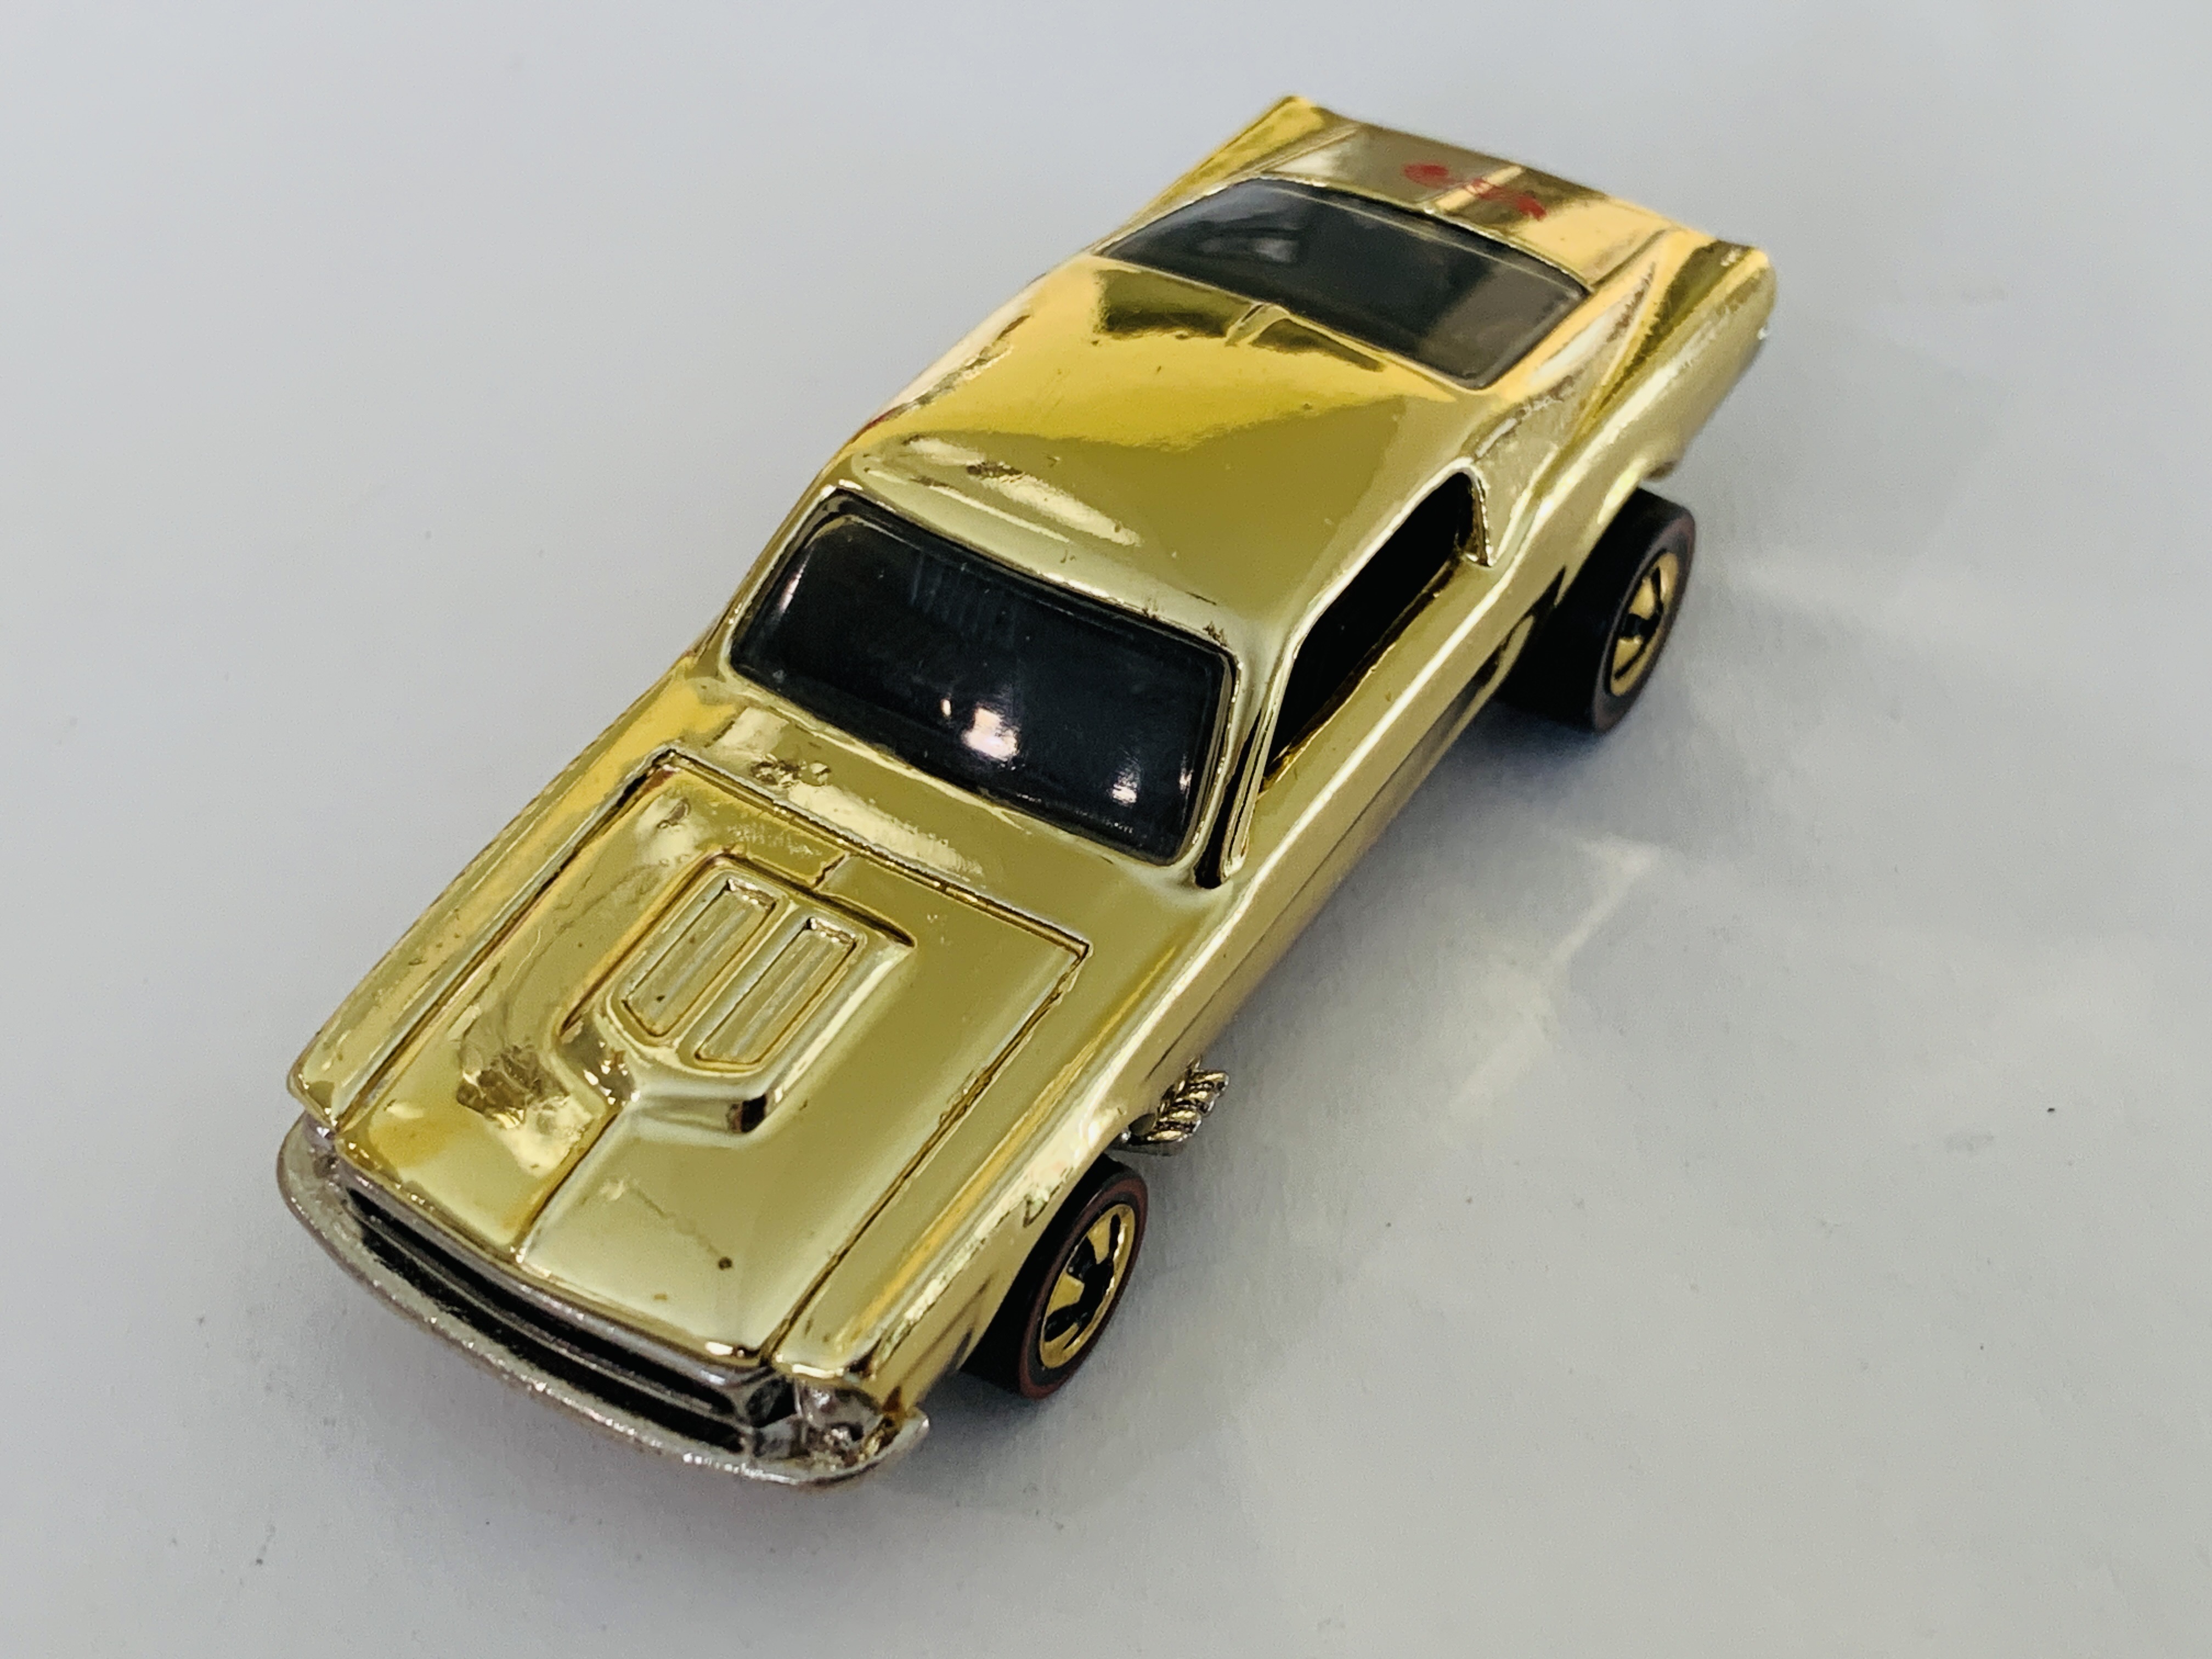 Hot Wheels FAO Schwarz Gold Series Custom Mustang